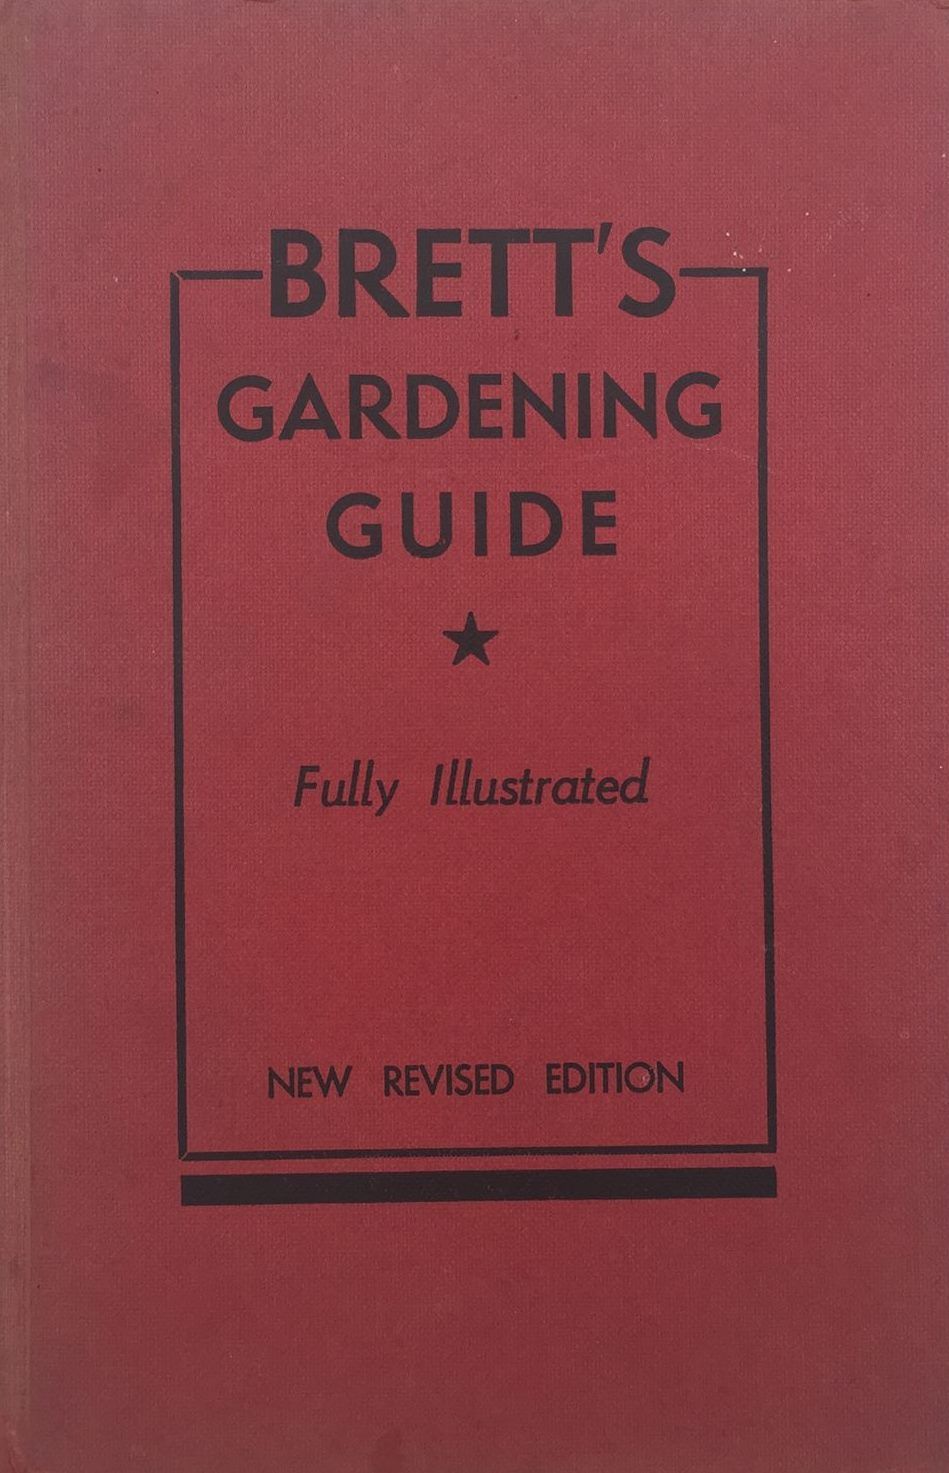 BRETT'S GARDENING GUIDE: 1959 New Revised Edition